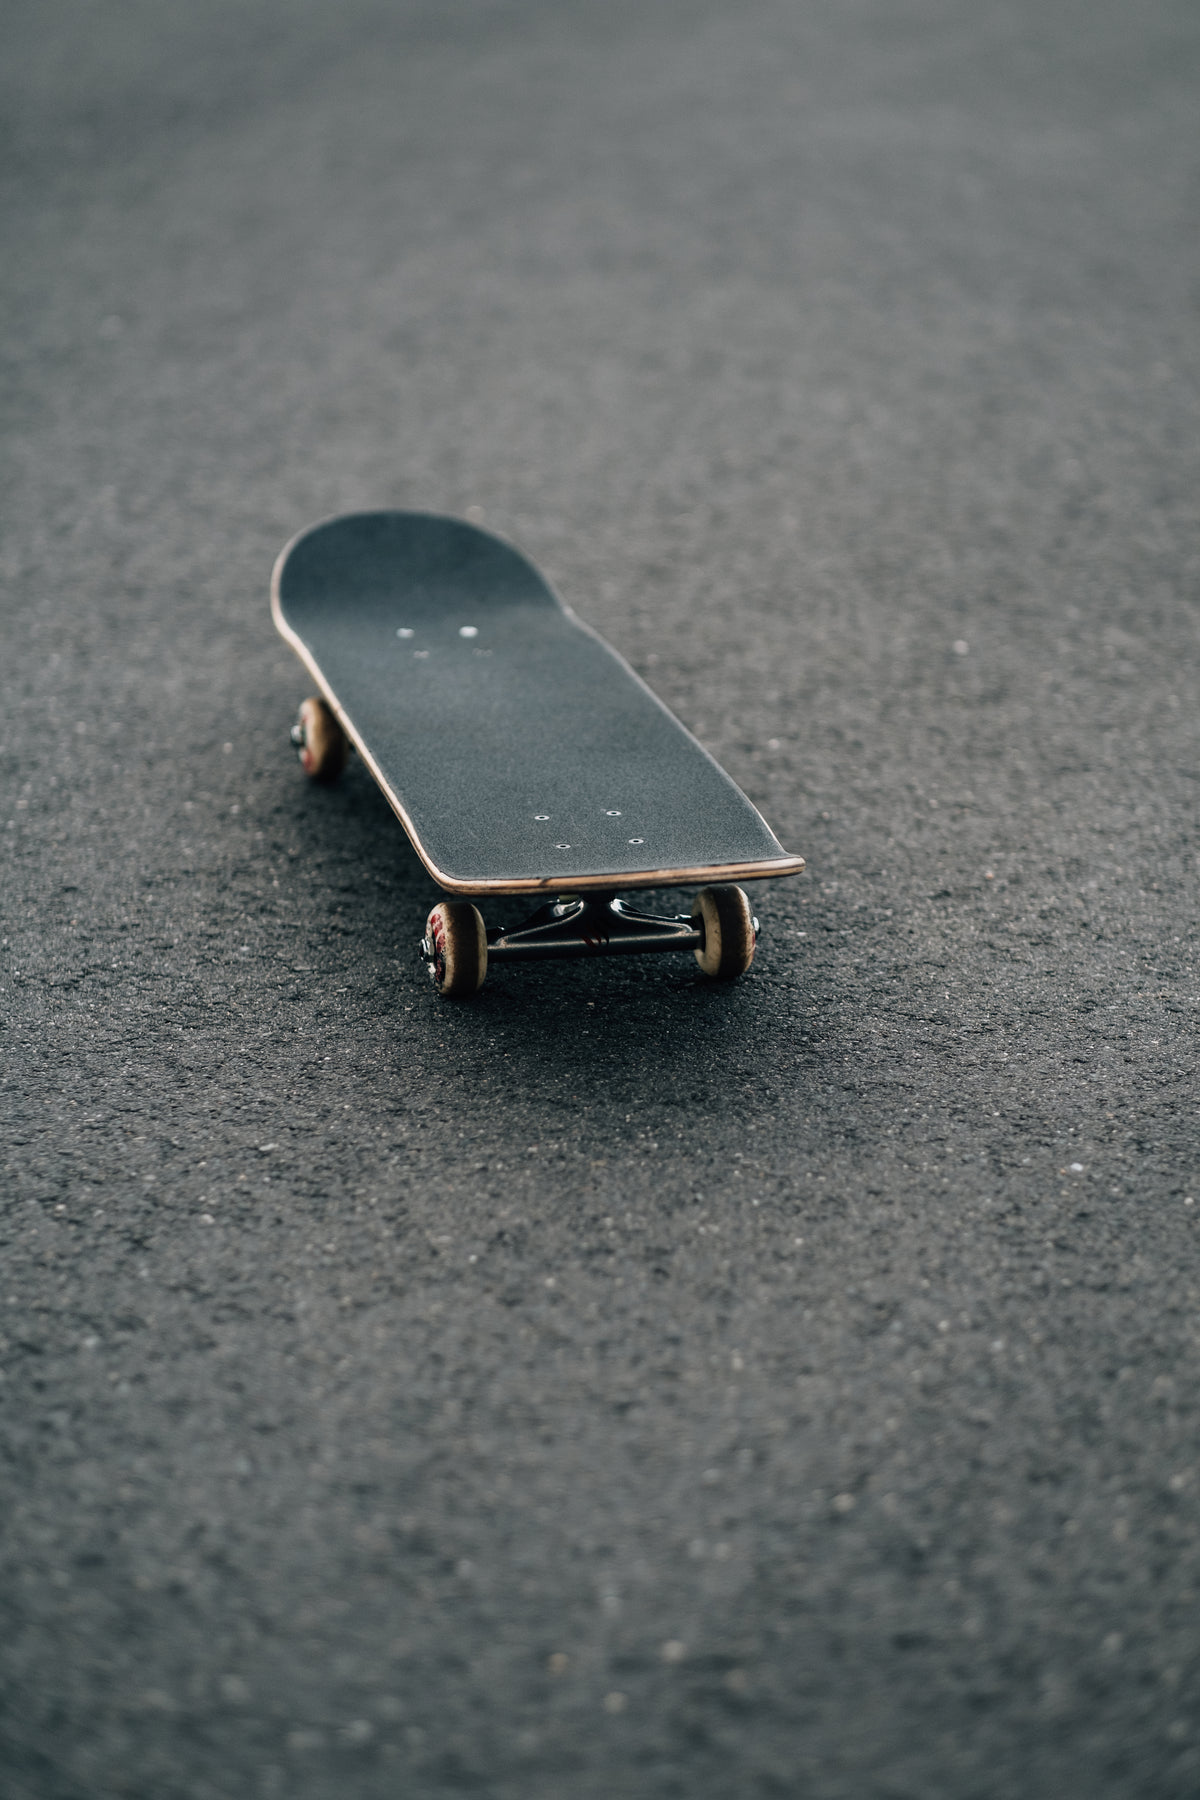 black skateboard on paved surface